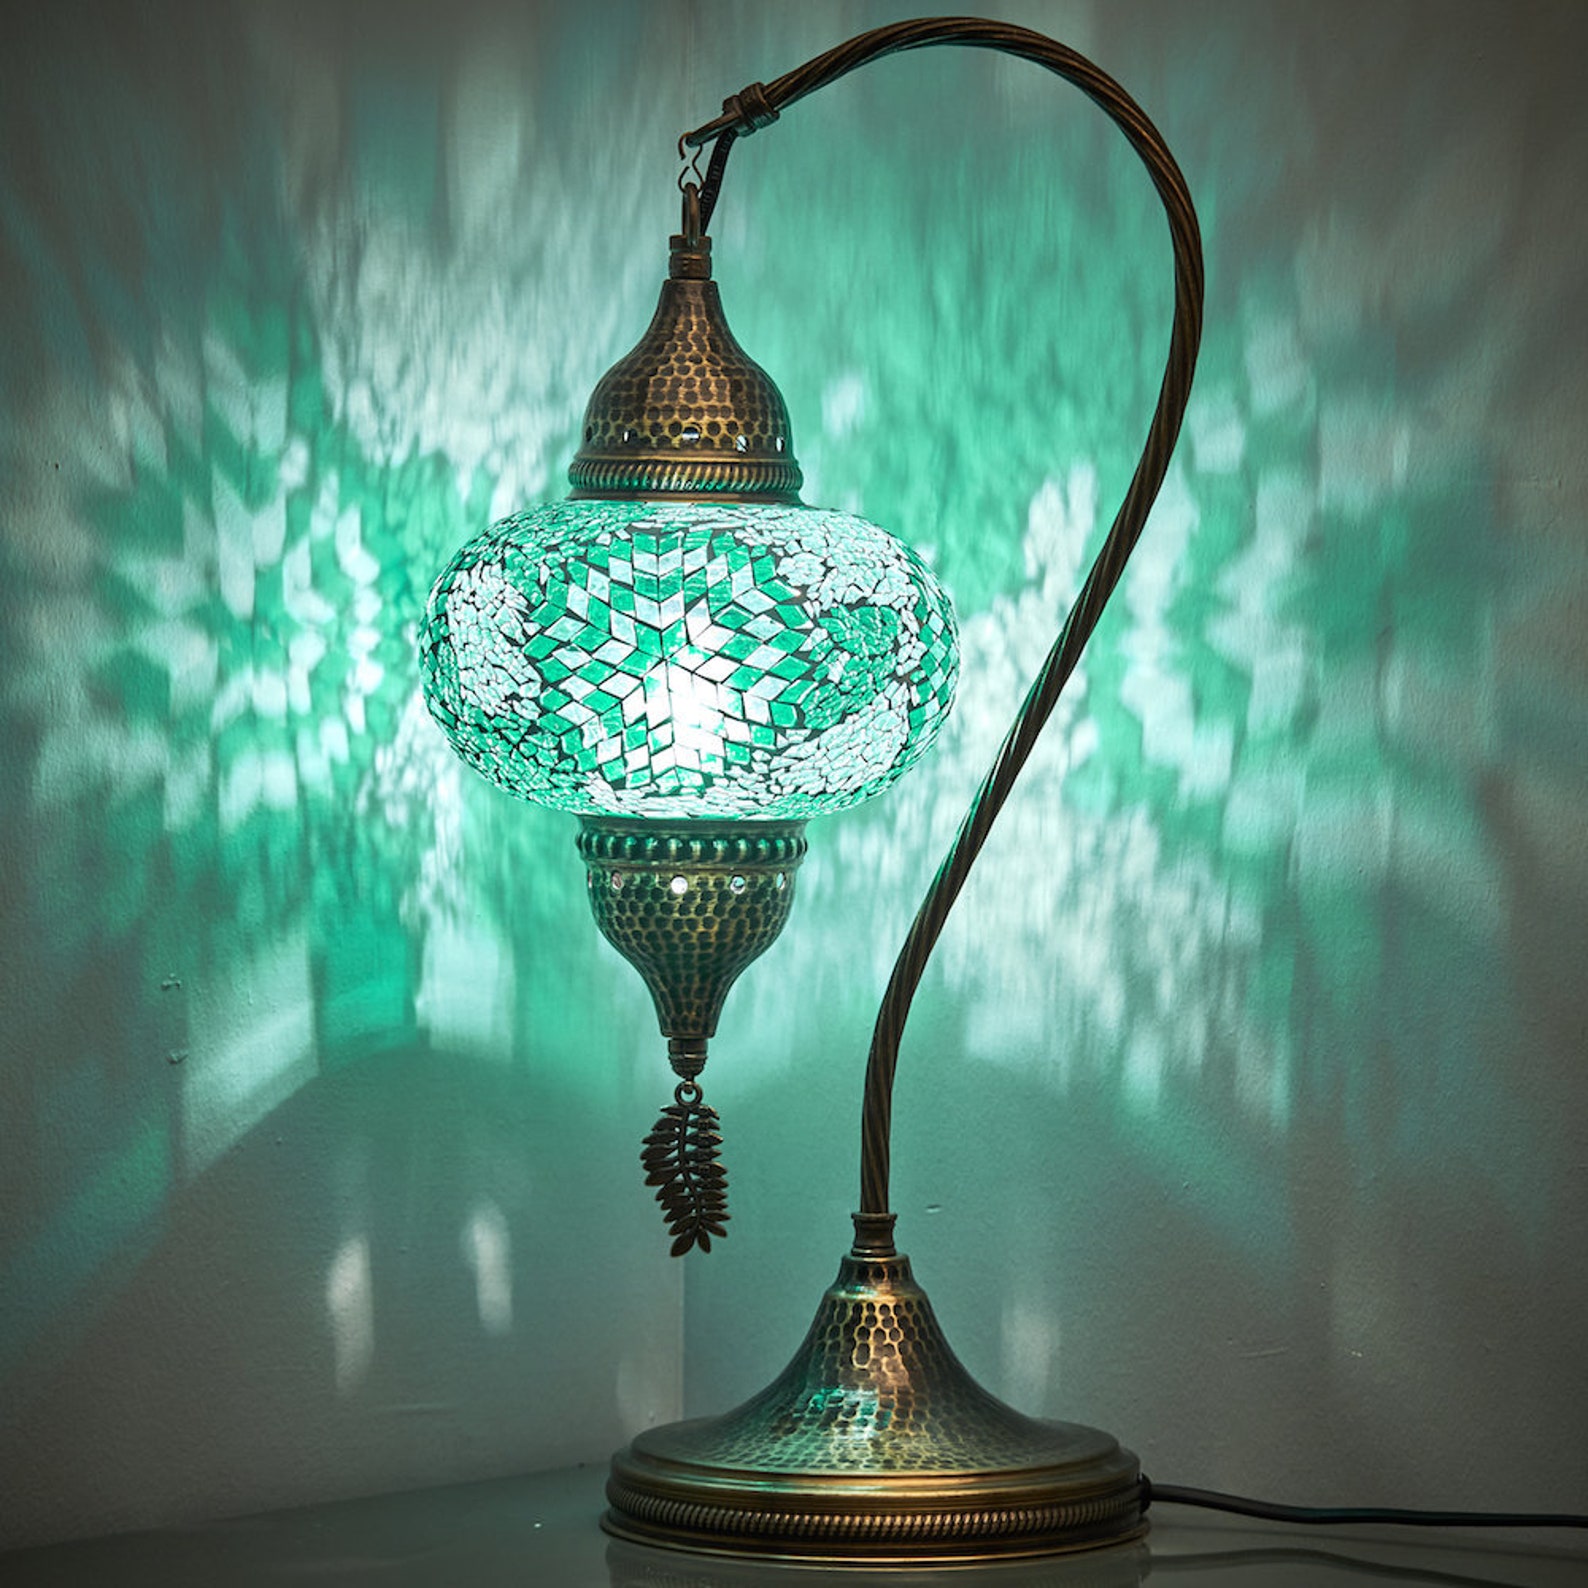 Turkish Moroccan Mosaic Boho Turquoise Teal Table Lamp Etsy